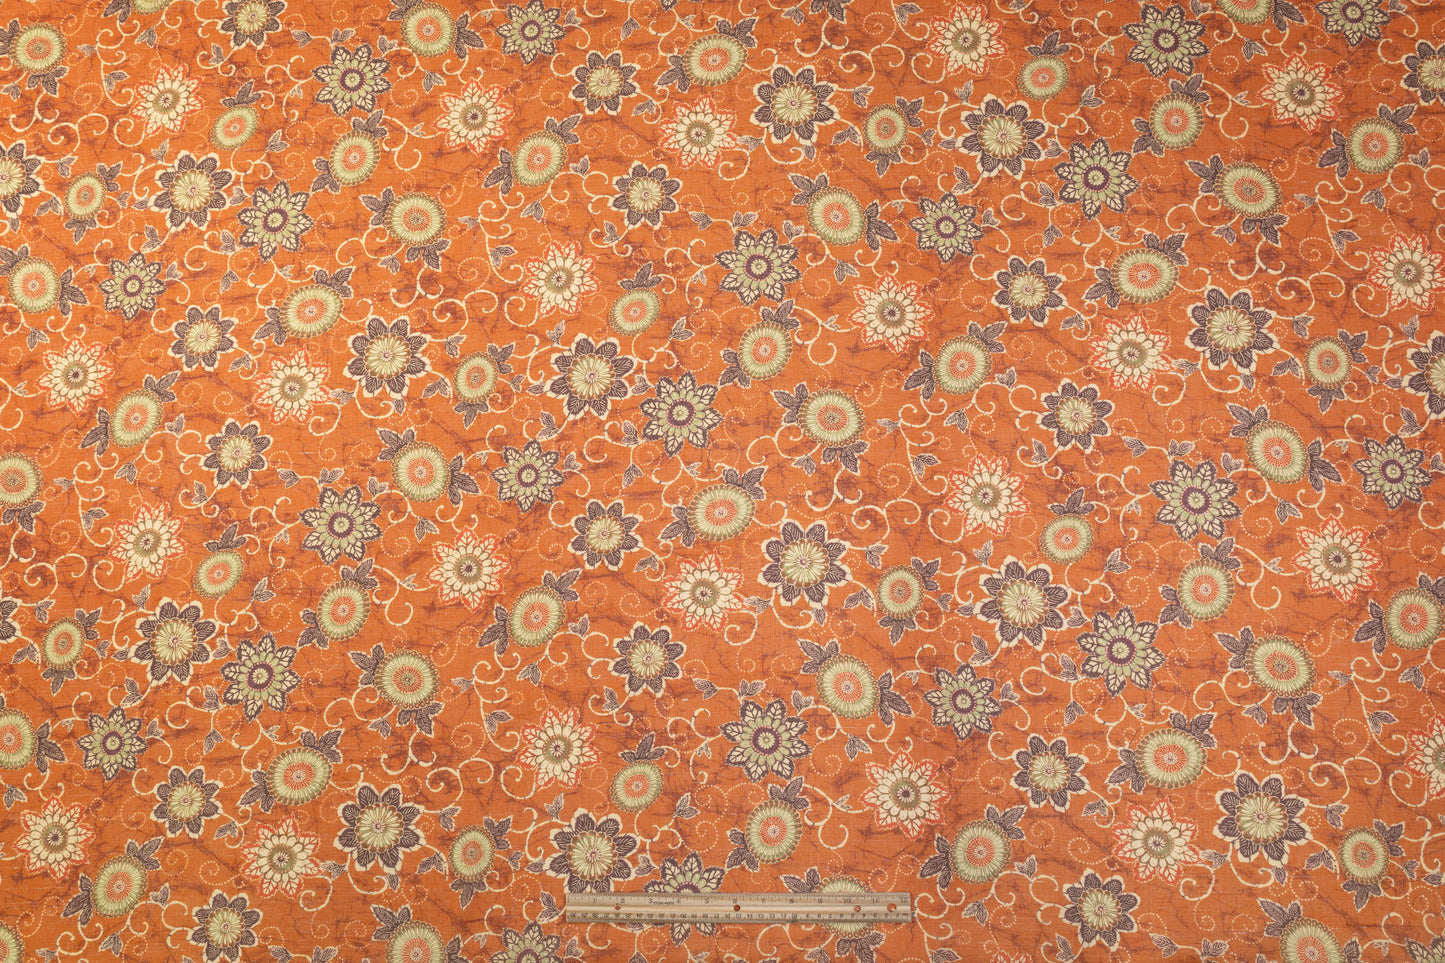 Floral Printed Italian Linen - Rust